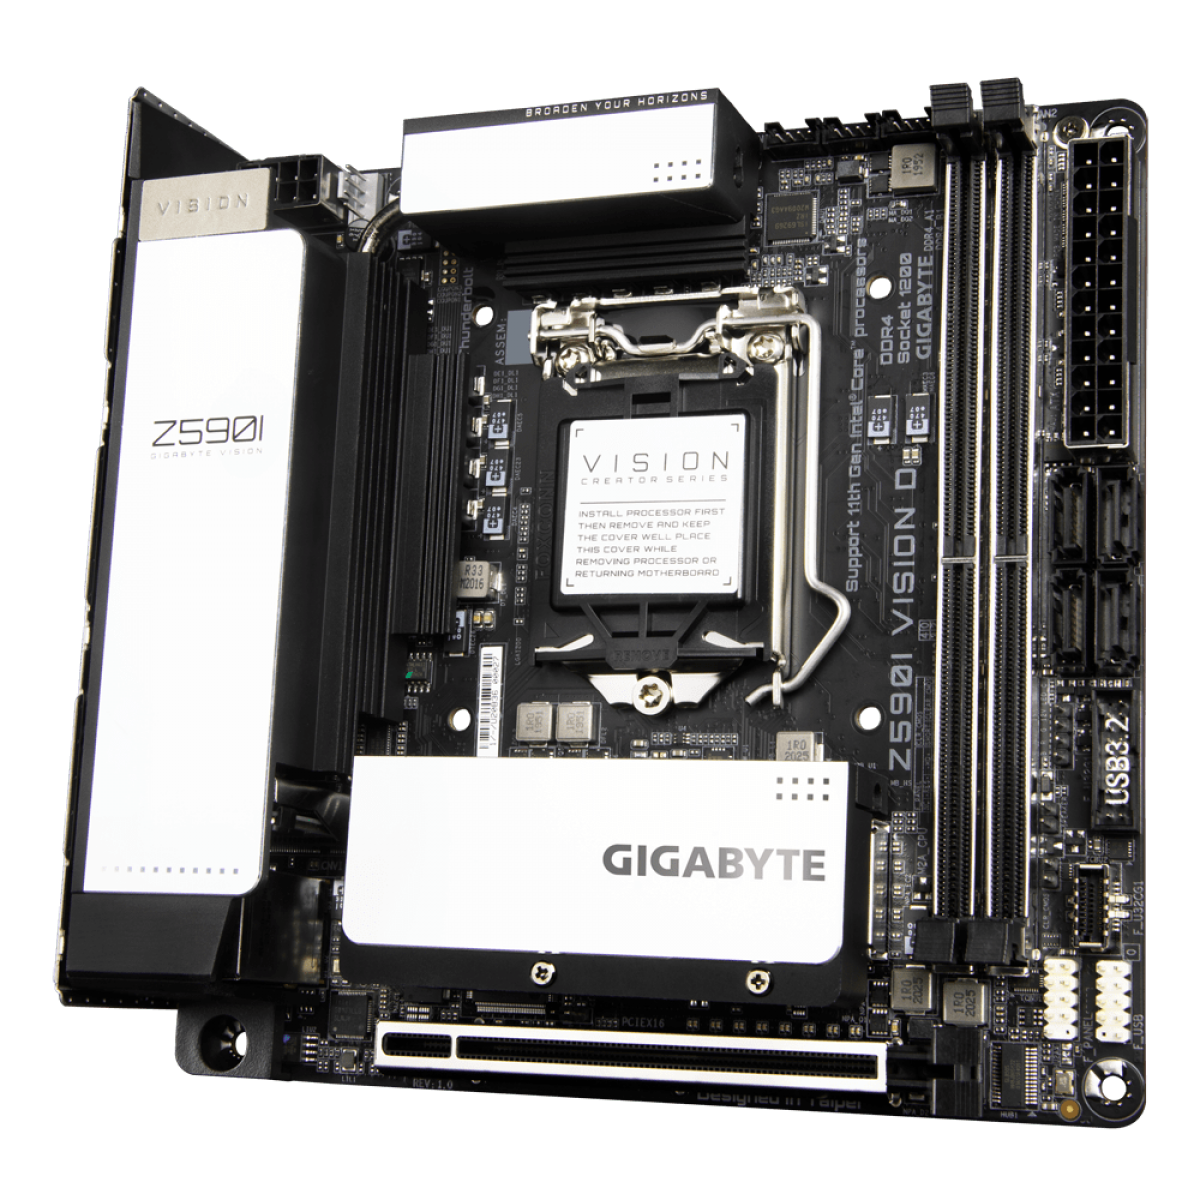 Placa Mãe GIGABYTE Z590I VISION D (rev. 1.0), Intel Z590 Express Chipset, Socket 1200, Mini-ITX, DDR4